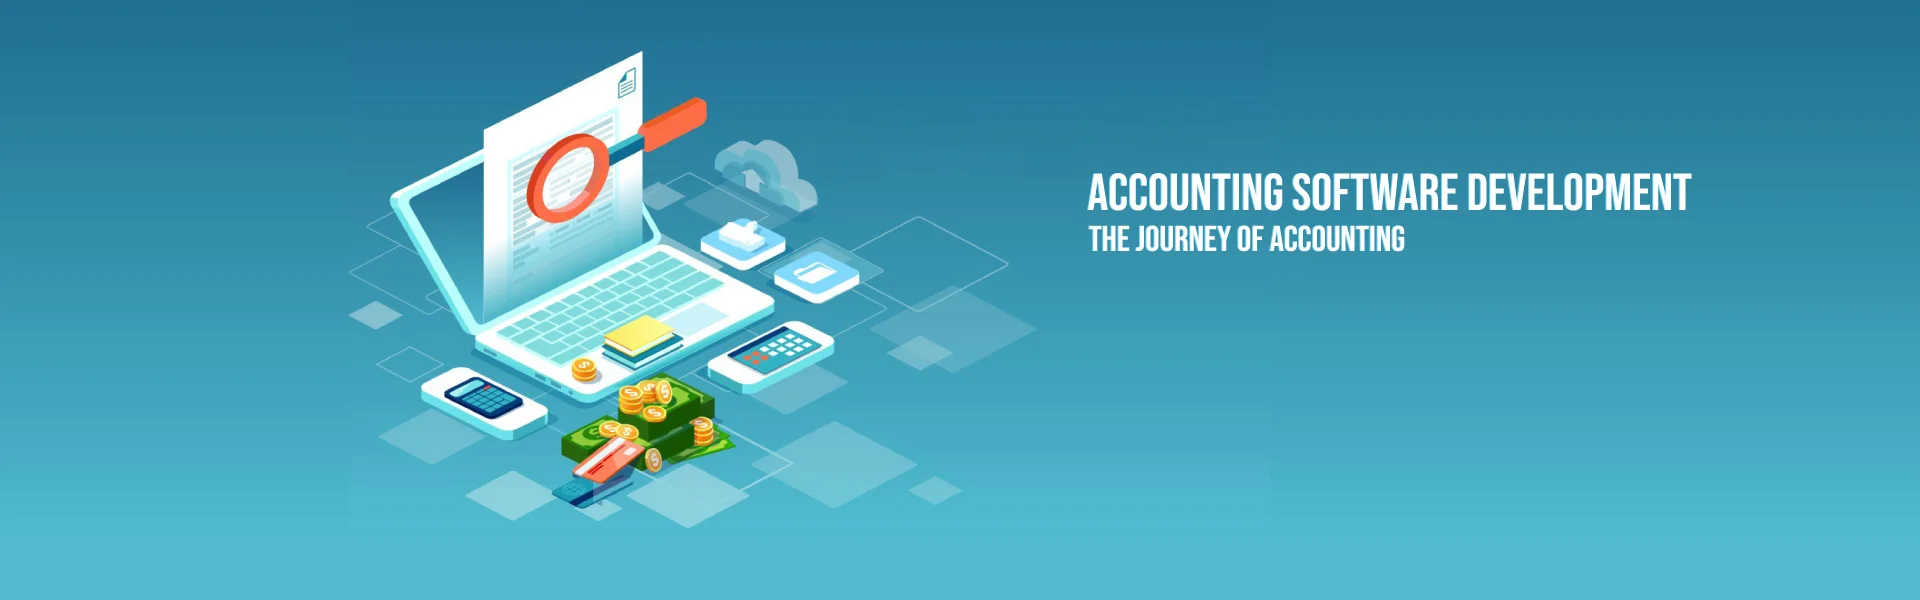 Accounting Software development